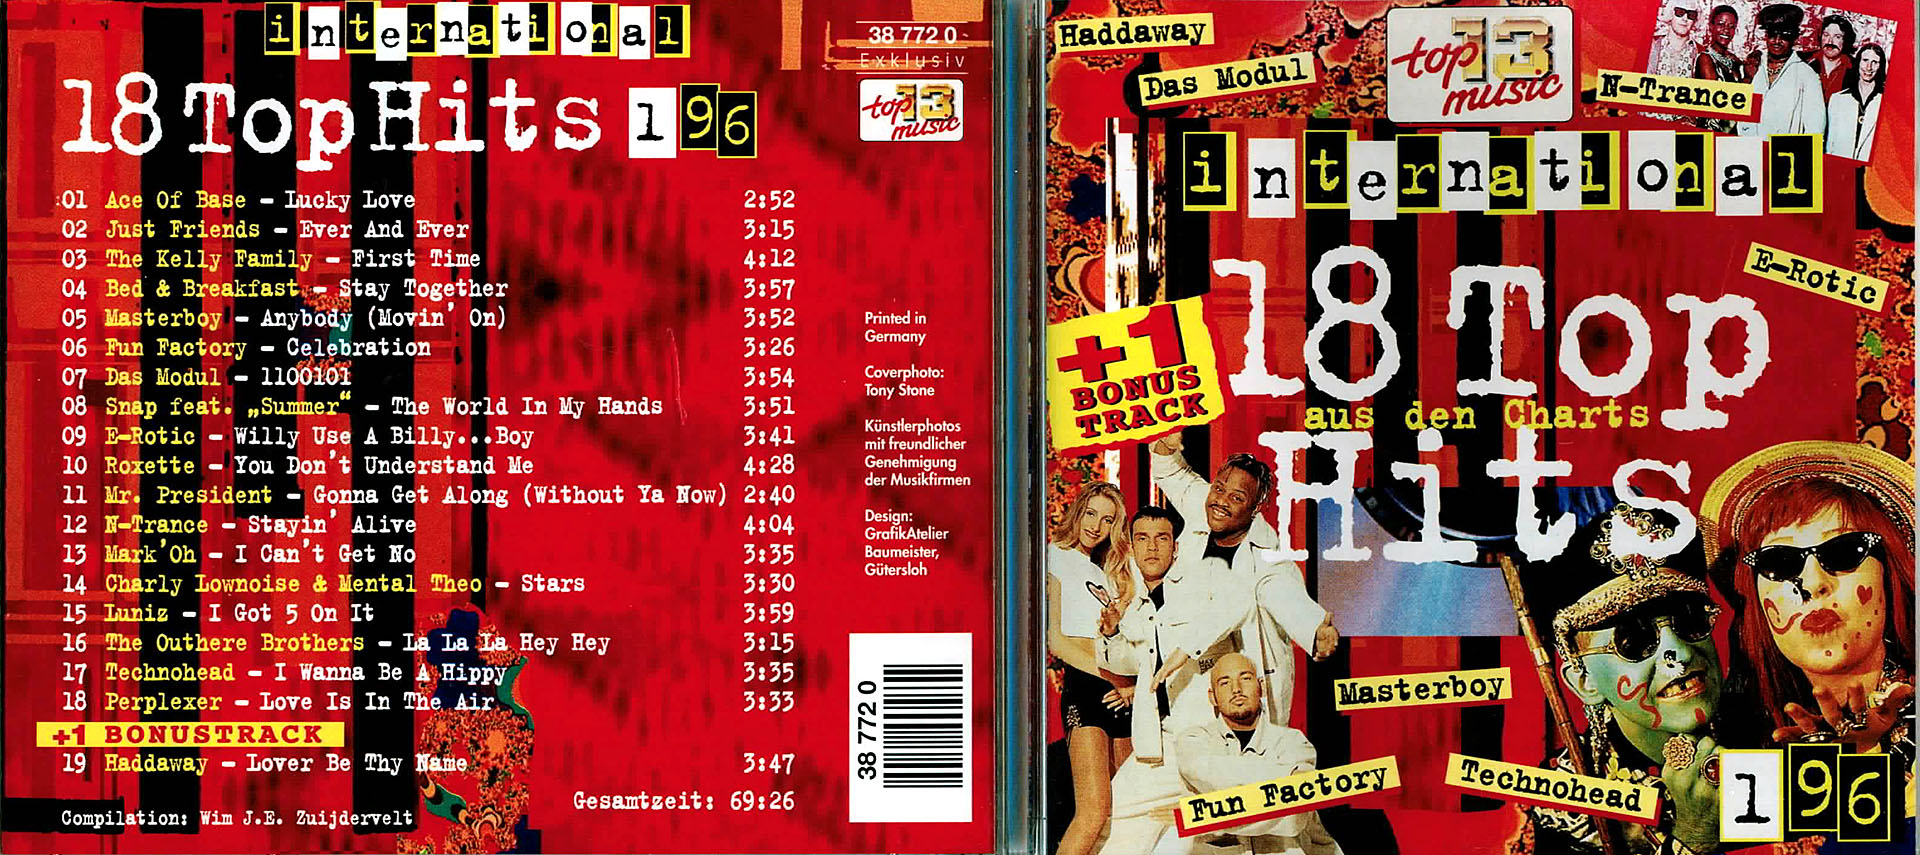 18 Top Hits aus den Charts 1/96 - Haddaway / Das Modul / N - Trabce / E-Rotic / Masterboy u.v.a.m